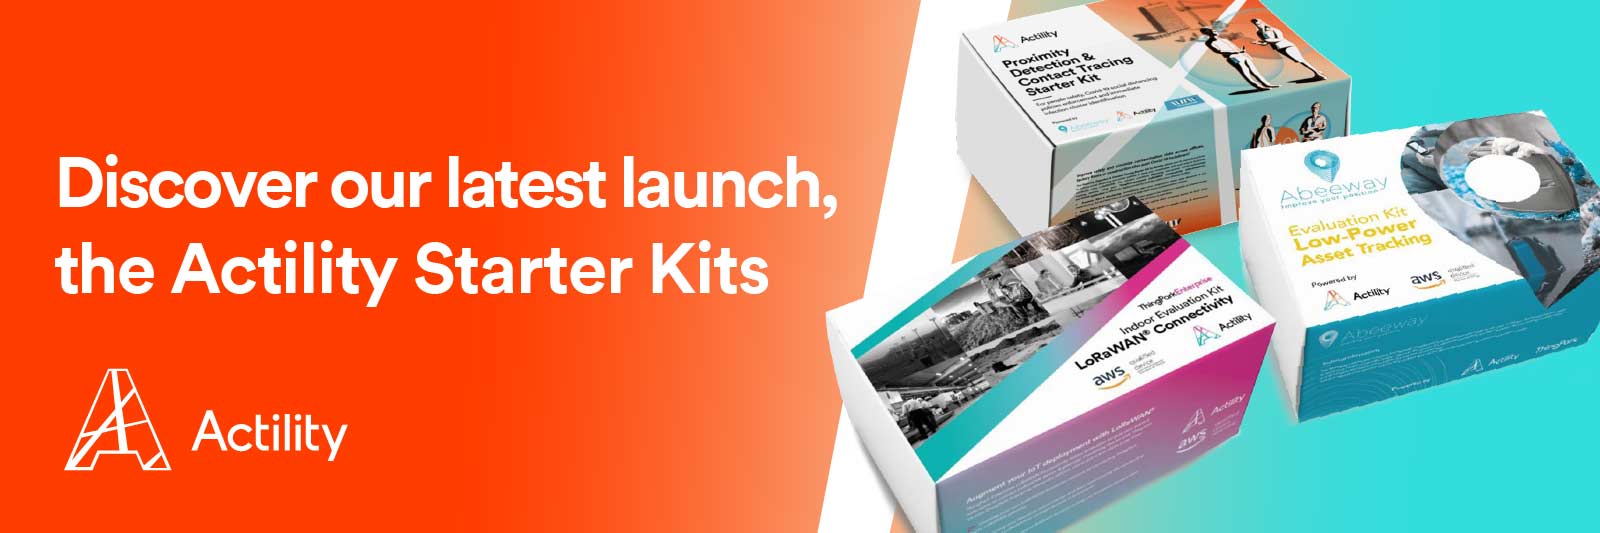 Image for Actility Starter kits Press release banner